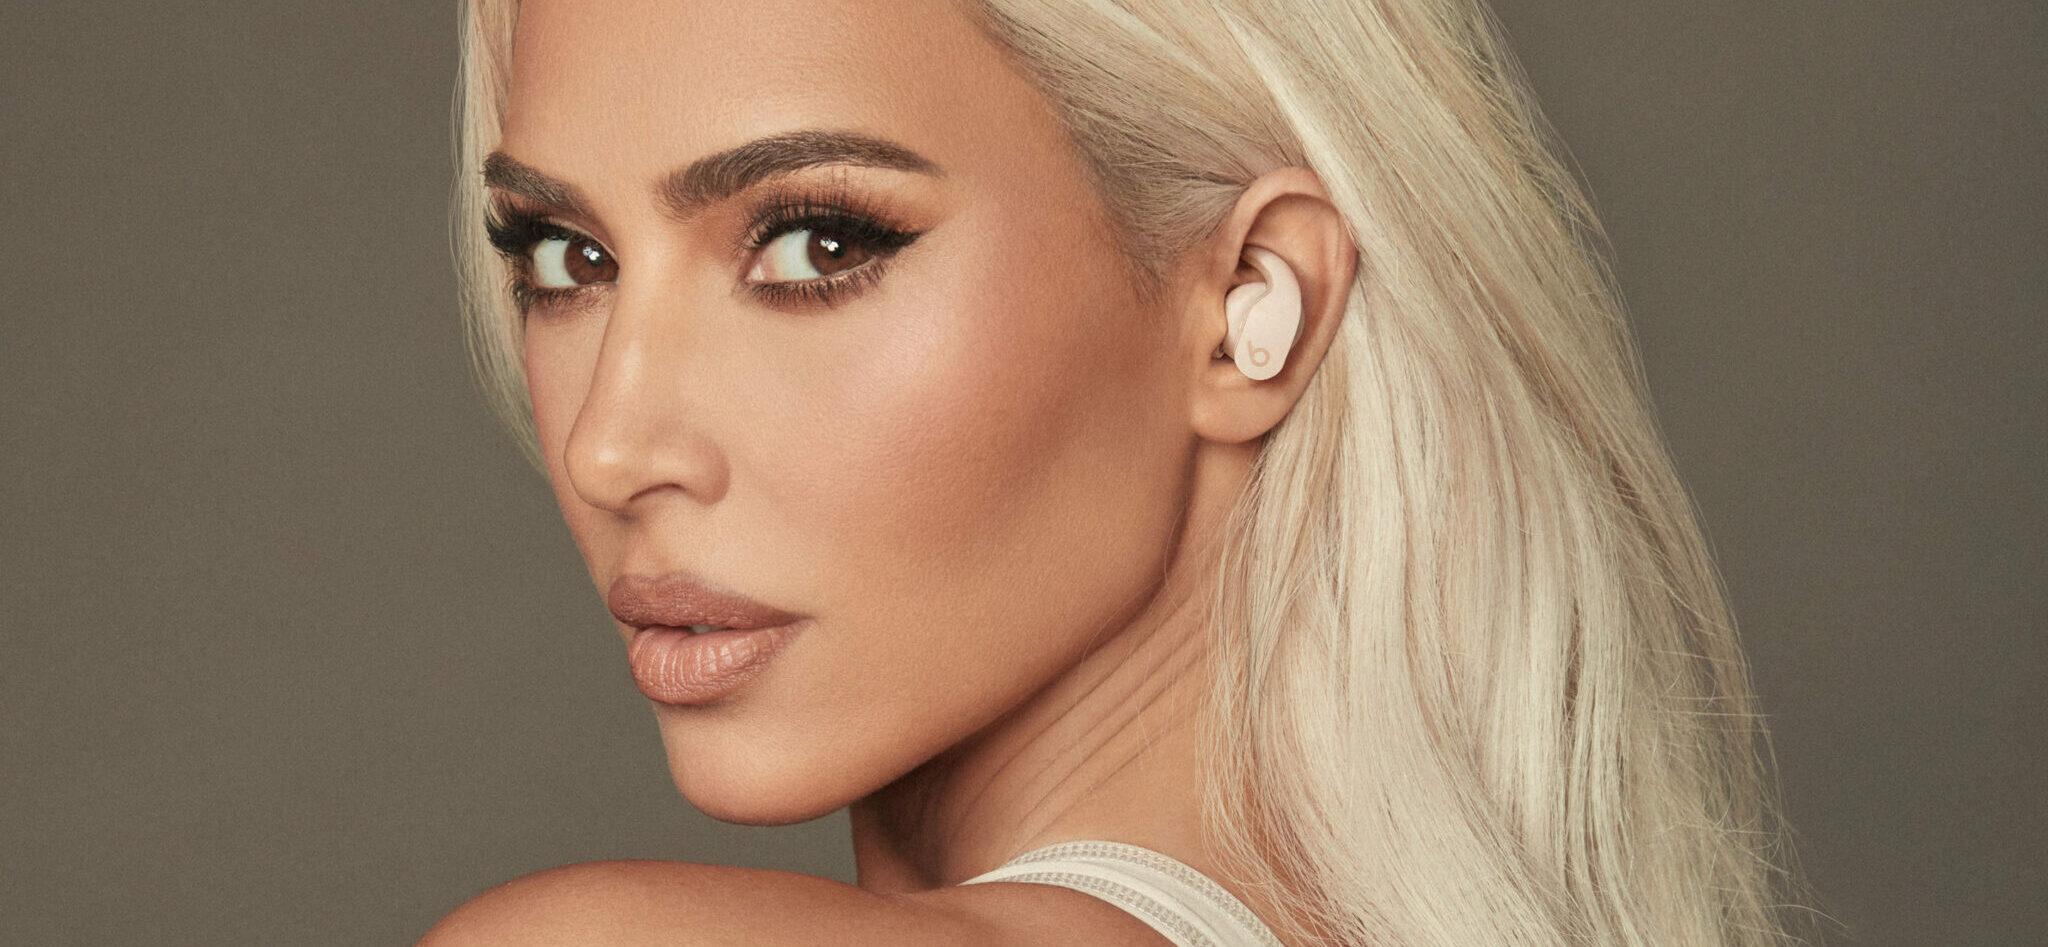 Kim Kardashian teams up with Beats by Dre to launch Beats x Kim wireless airbuds